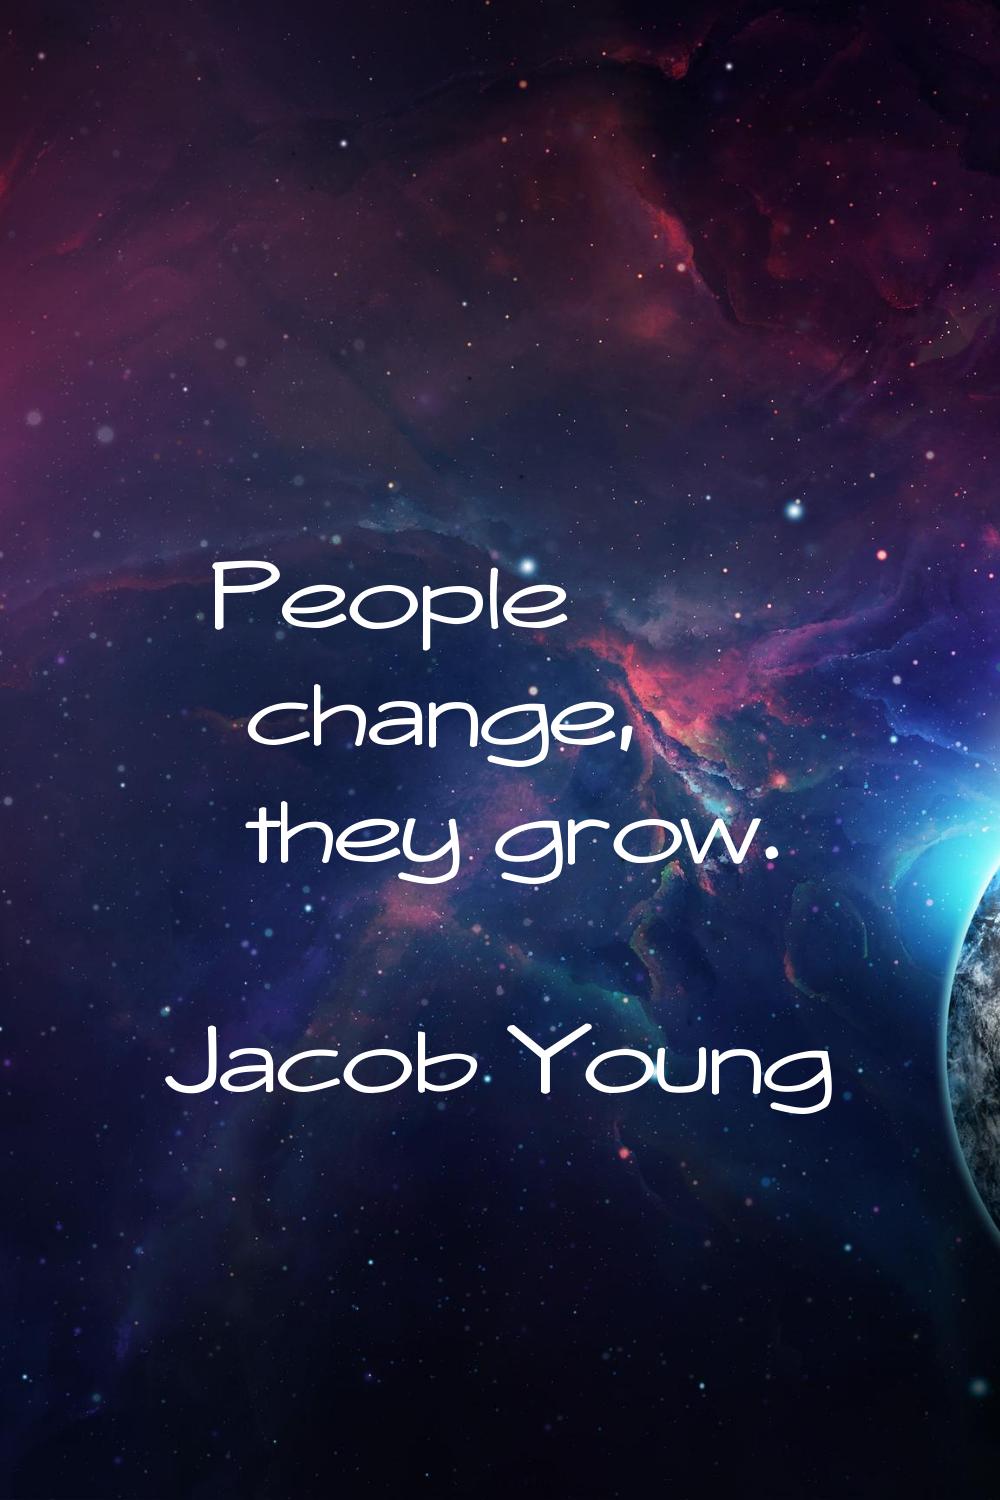 People change, they grow.